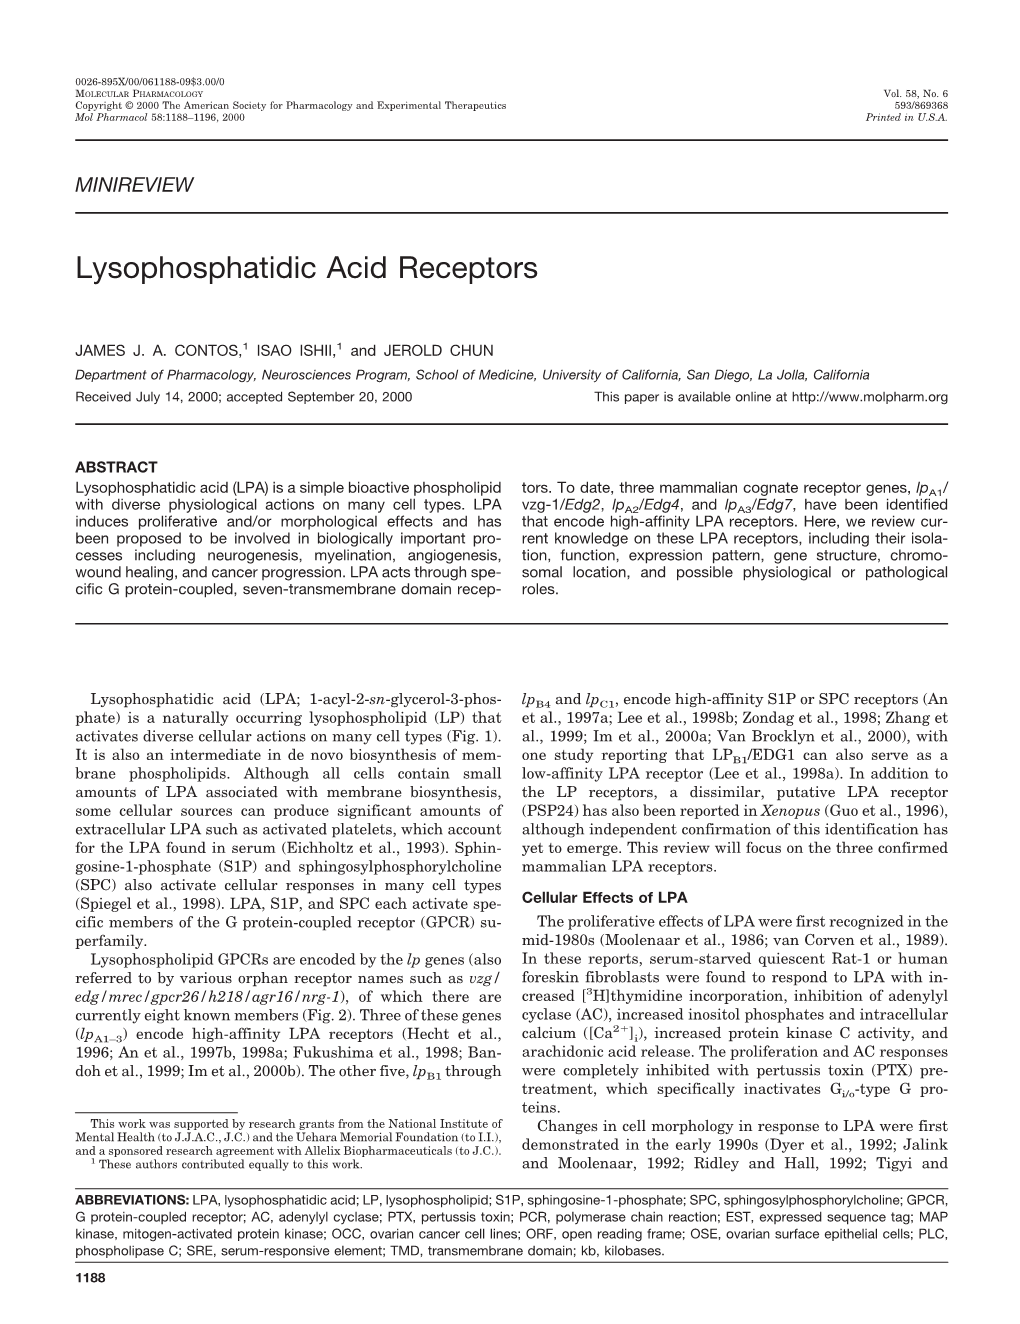 Lysophosphatidic Acid Receptors